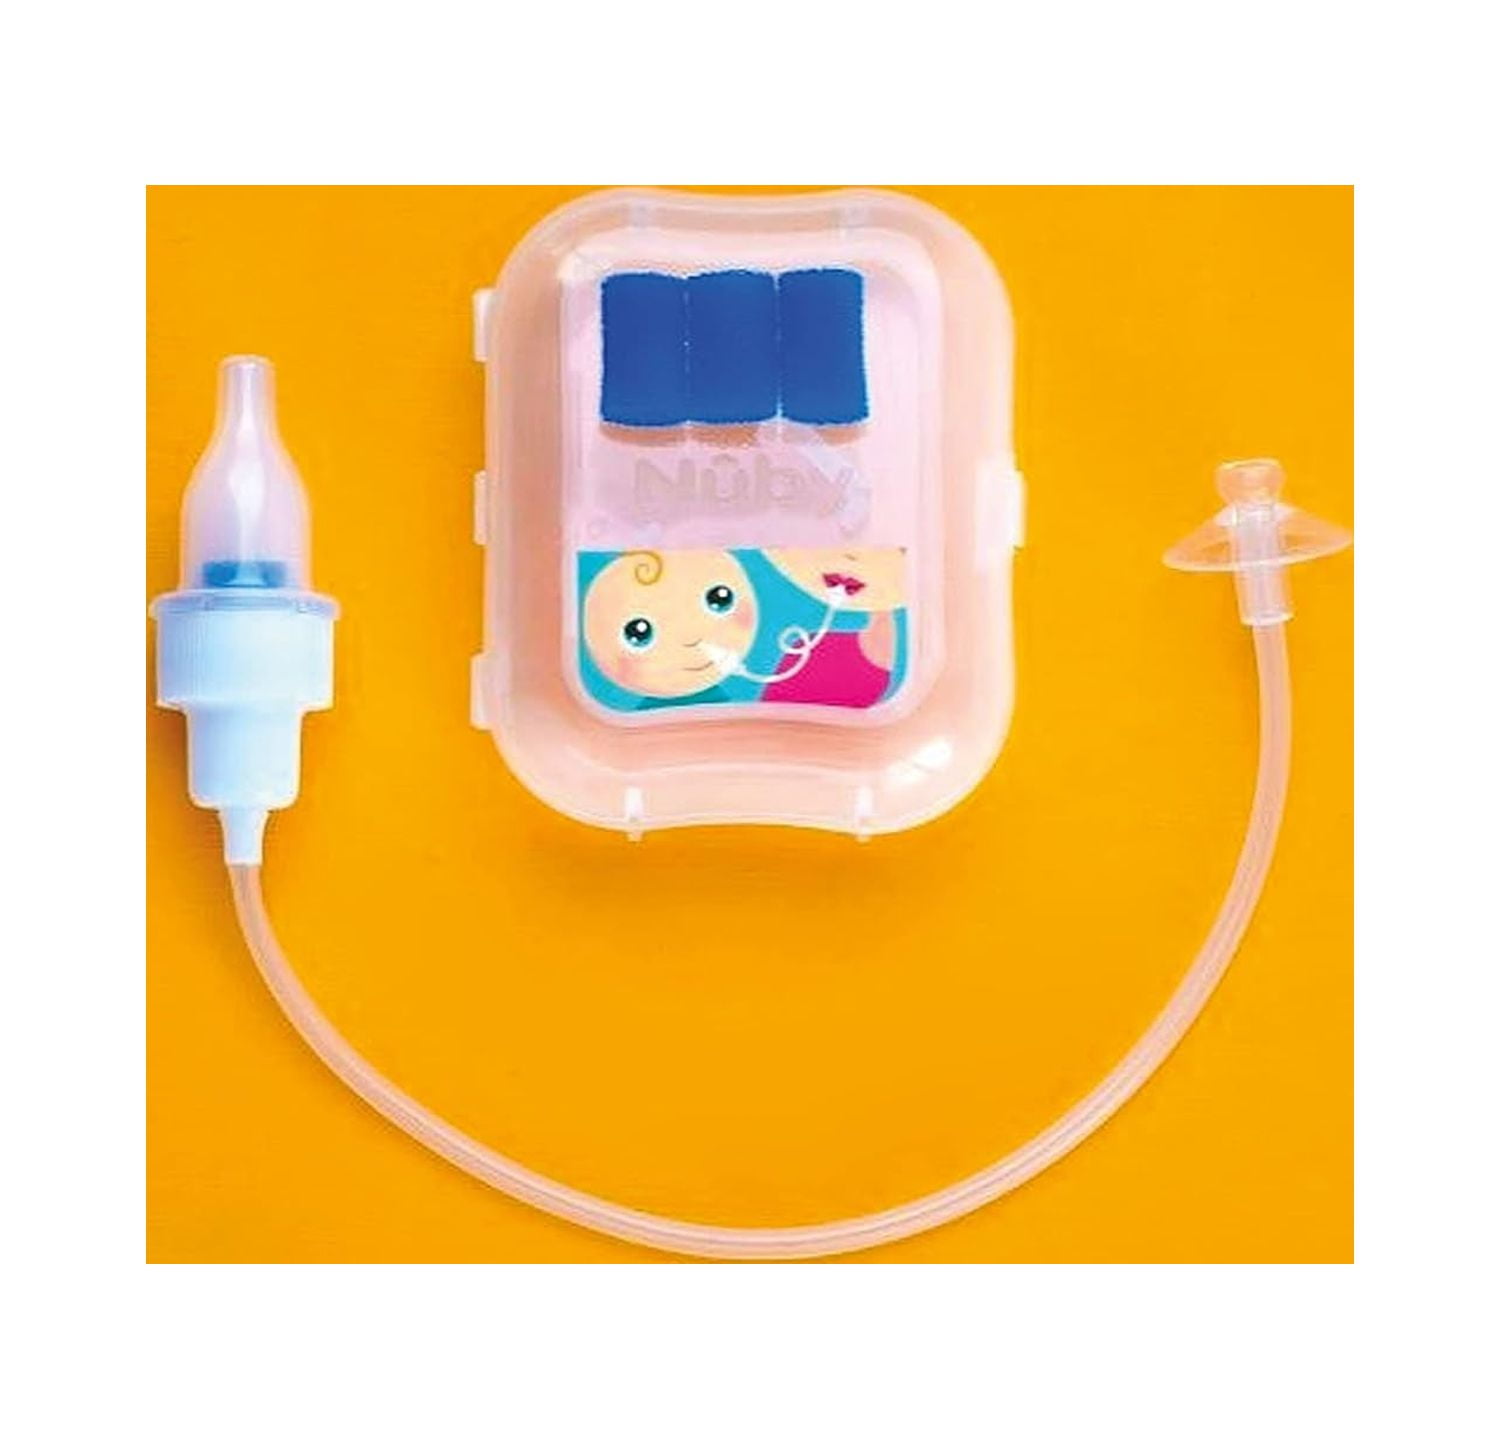 Breathe-Eez Nasal Aspirator, Baby Healthcare